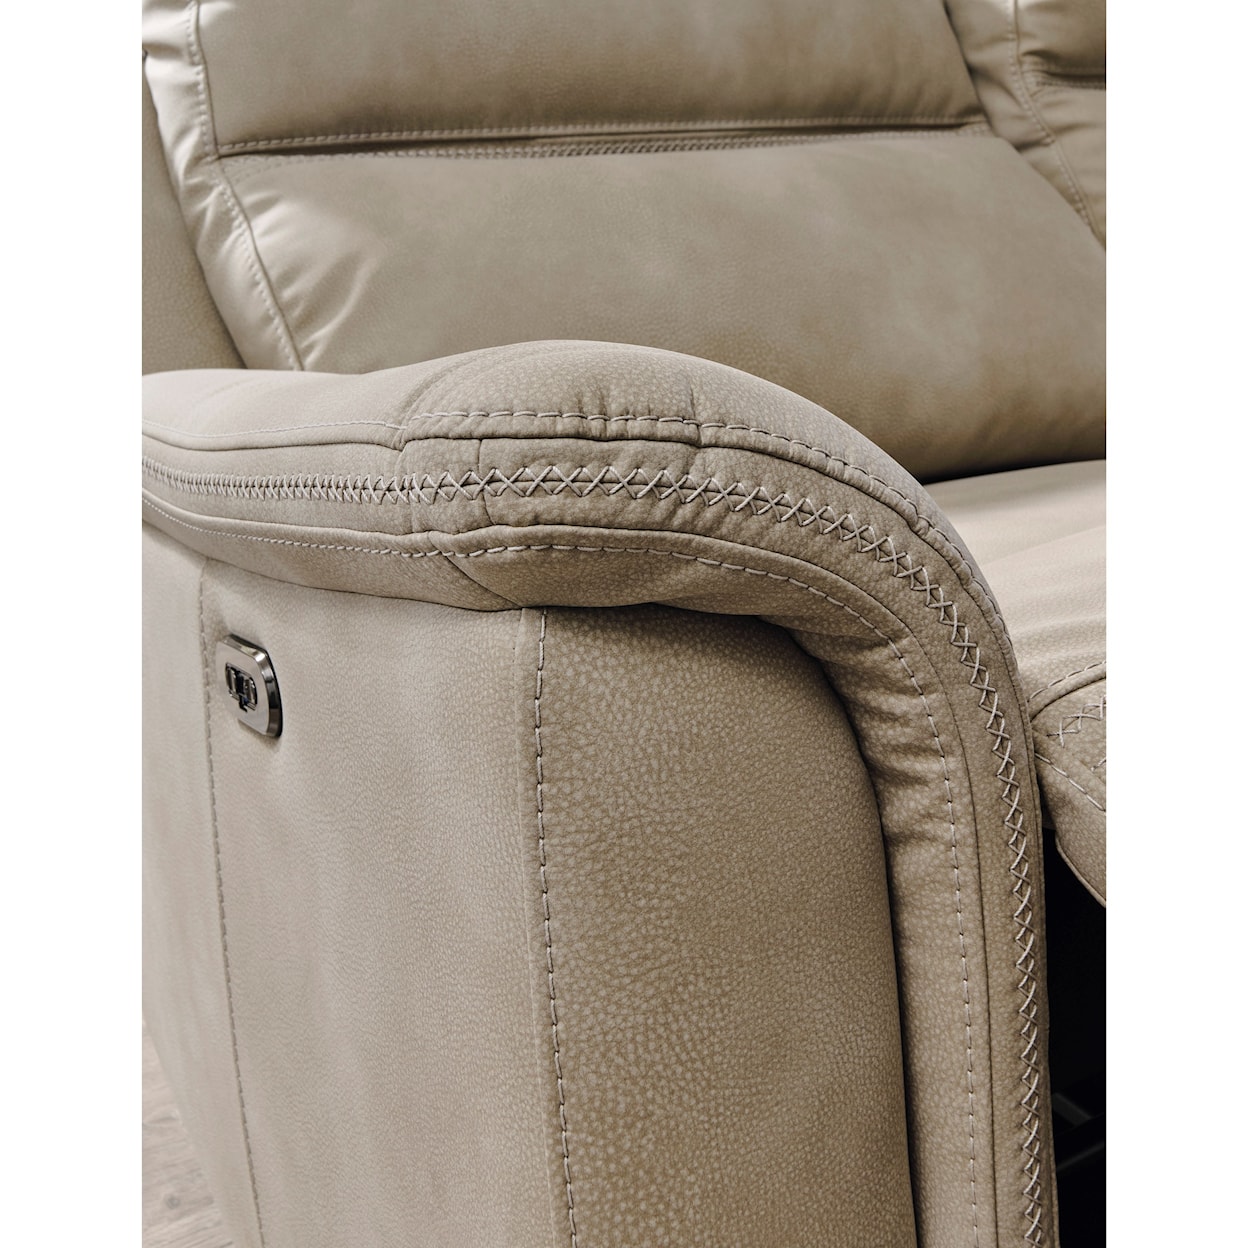 Signature Design by Ashley Furniture Next-Gen DuraPella 2-Seat Pwr Rec Sofa  w/ Adj Headrests